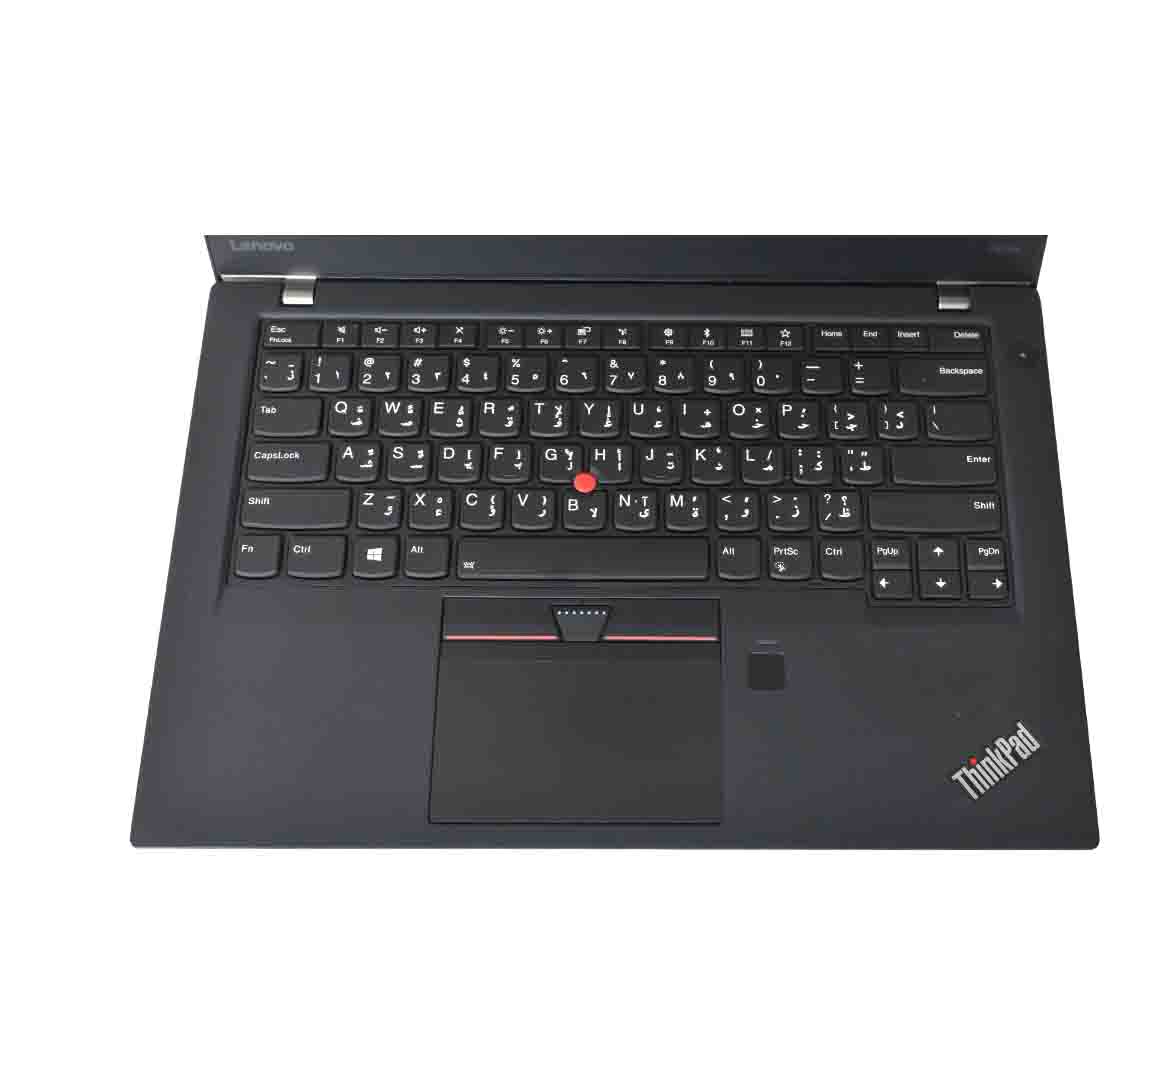 Lenovo ThinkPad T470s Business Laptop, Intel Core i7-7th Generation CPU, 20GB RAM, 256GB SSD, 14 inch Display, Windows 10 Pro, Refurbished Laptop